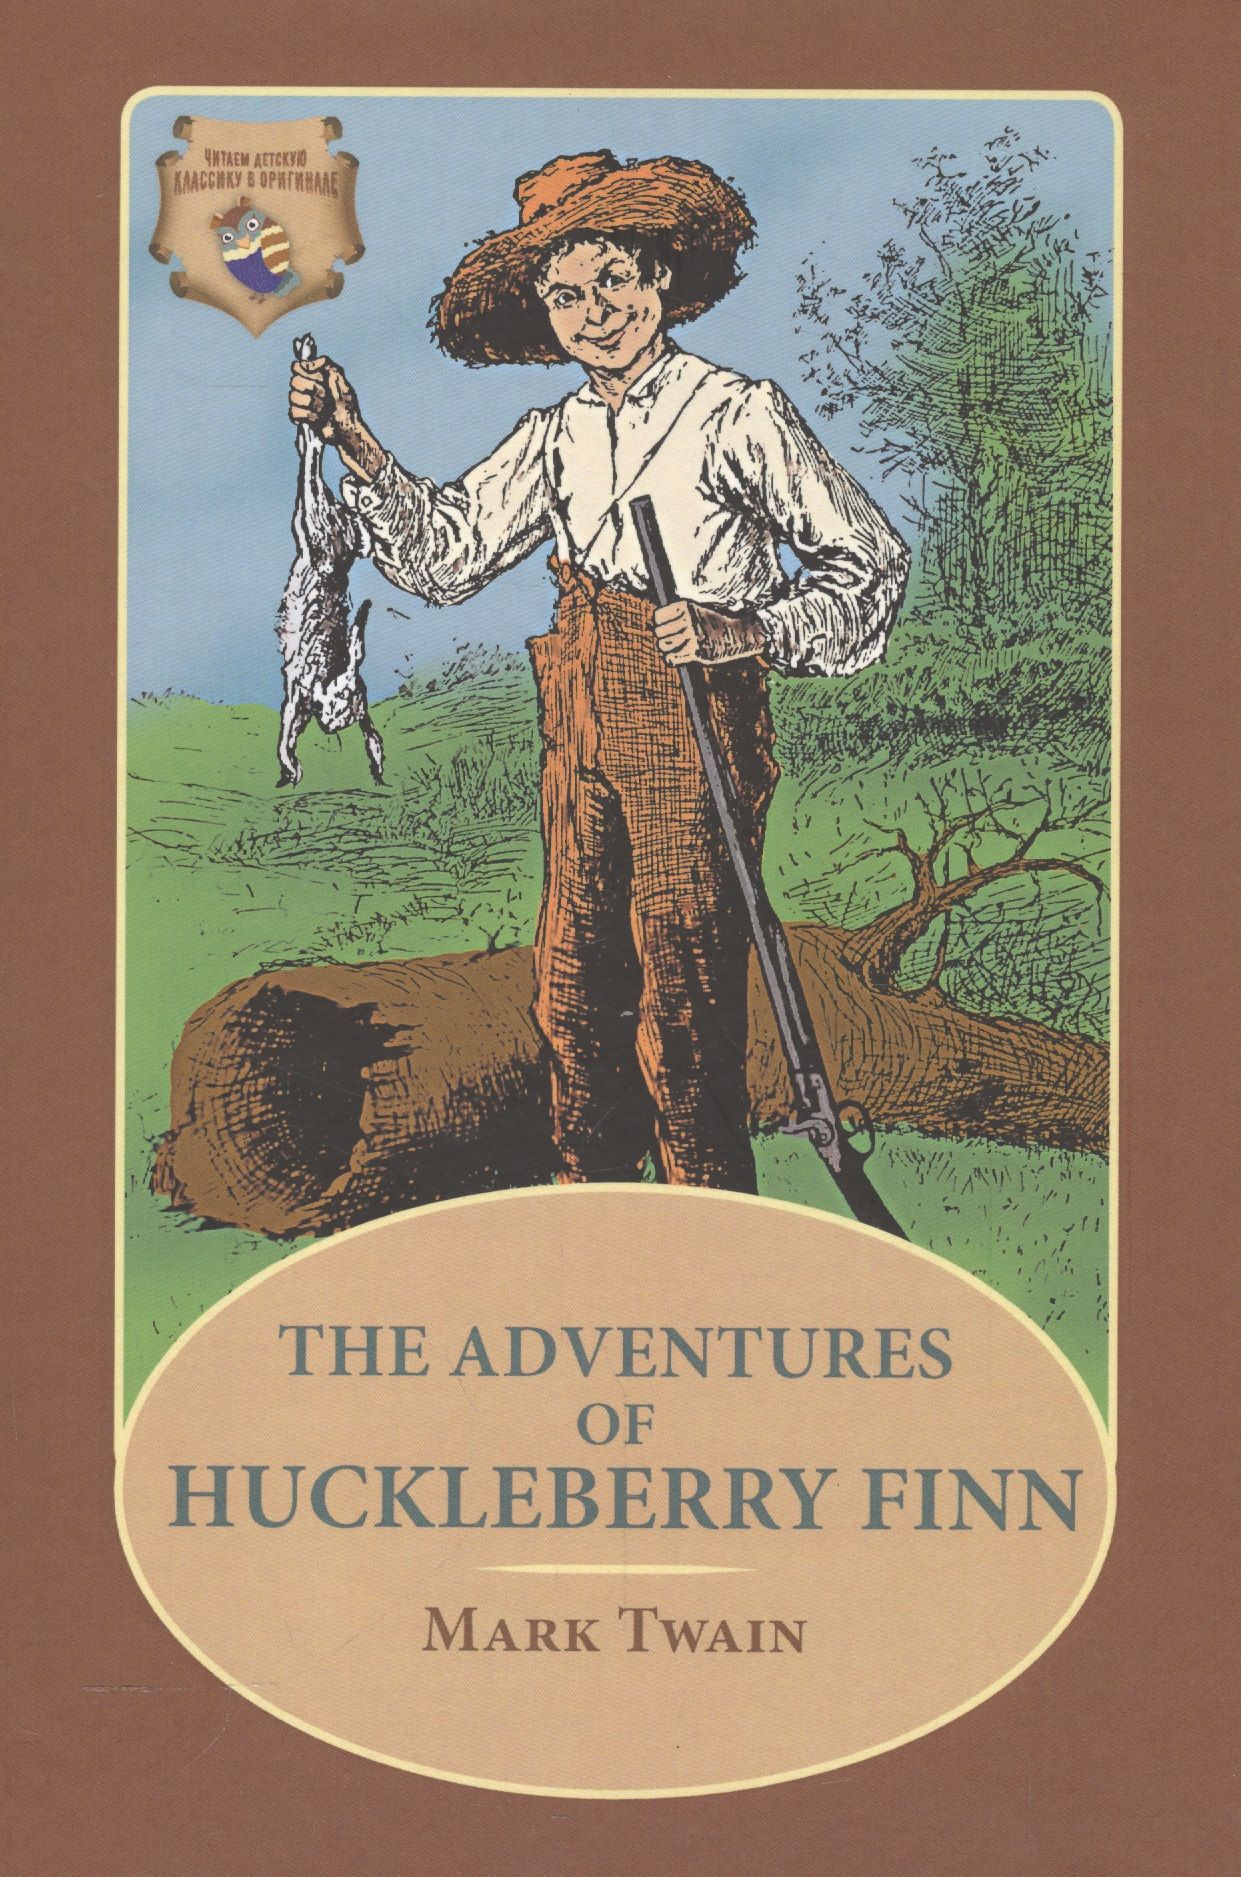 Mark twain wrote the adventures of huckleberry. Книжки марка Твена. Приключения Тома Сойера и Гекльберри Финна. Приключение гекельберифина книга.